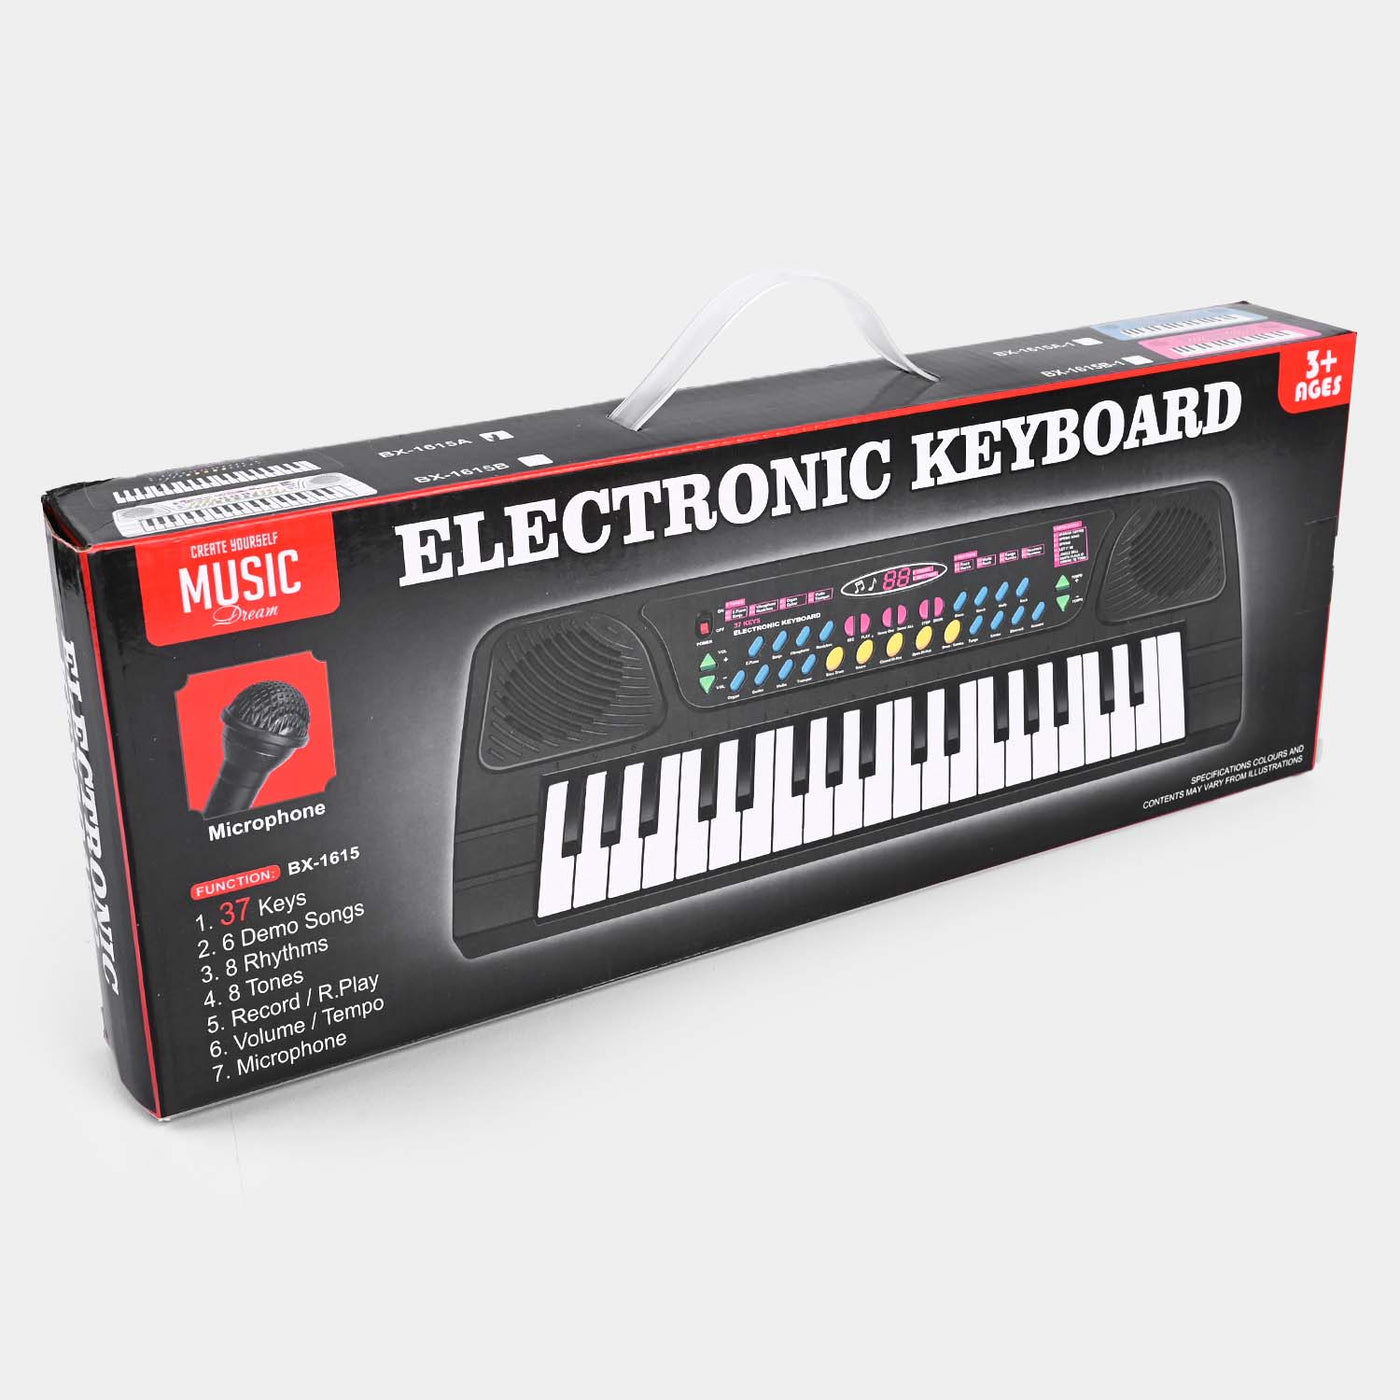 37 KEYS ELECTRONIC KEYBOARD PIANO FOR KIDS